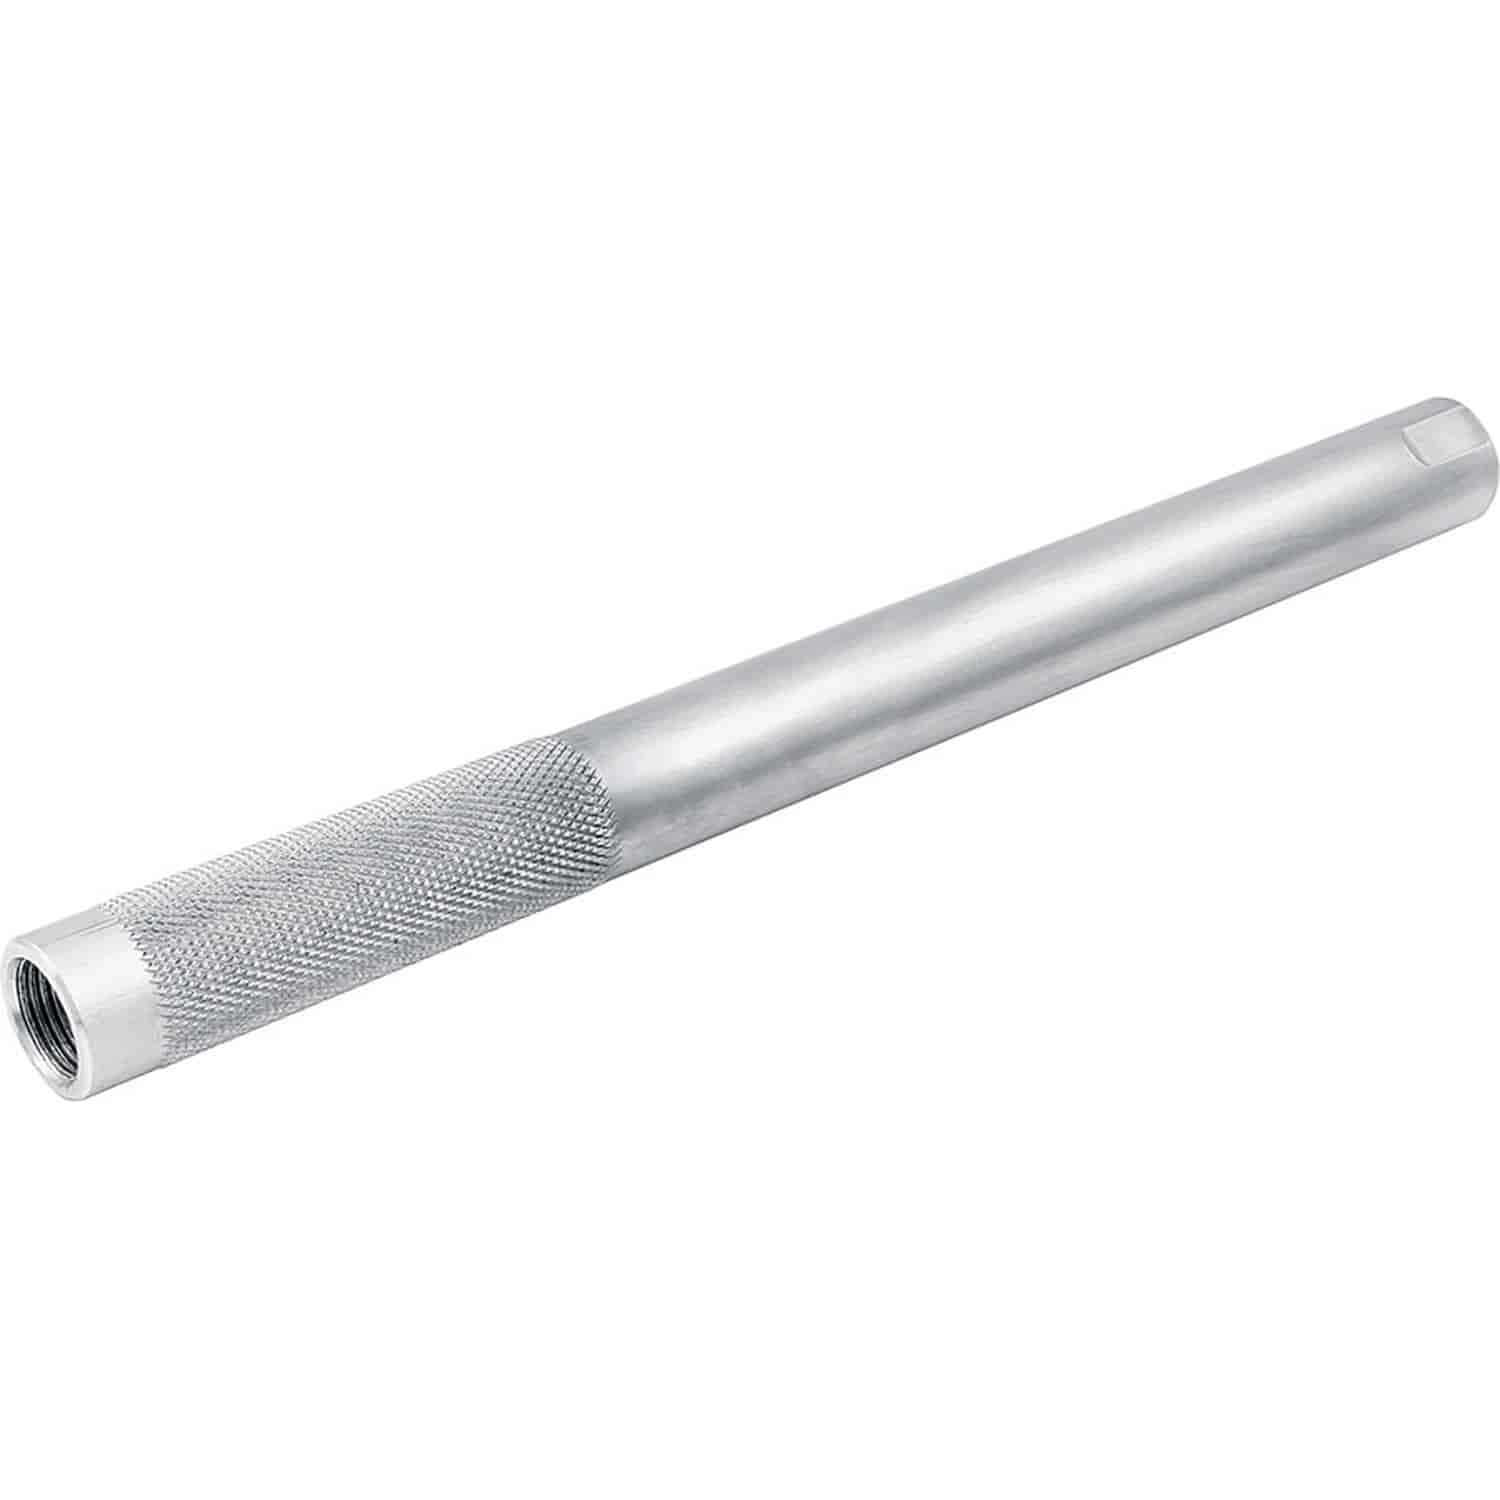 Swedged Aluminum Tie Rod Tube Length: 26